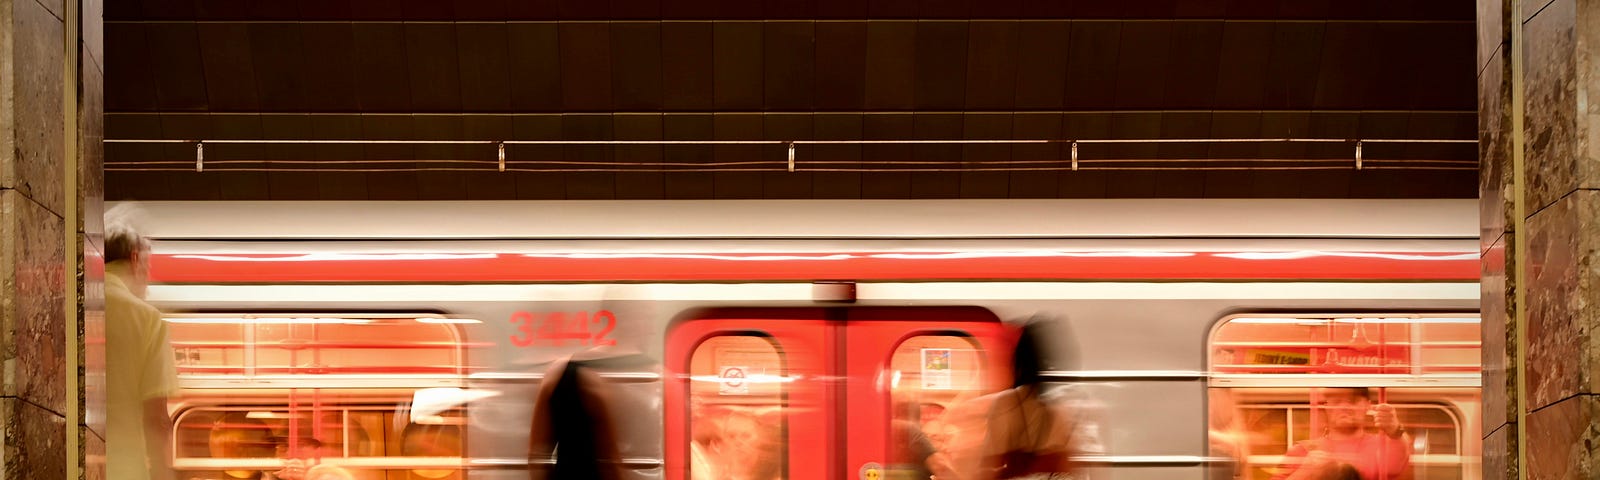 A metro train speeding past people waiting on the subway platform.